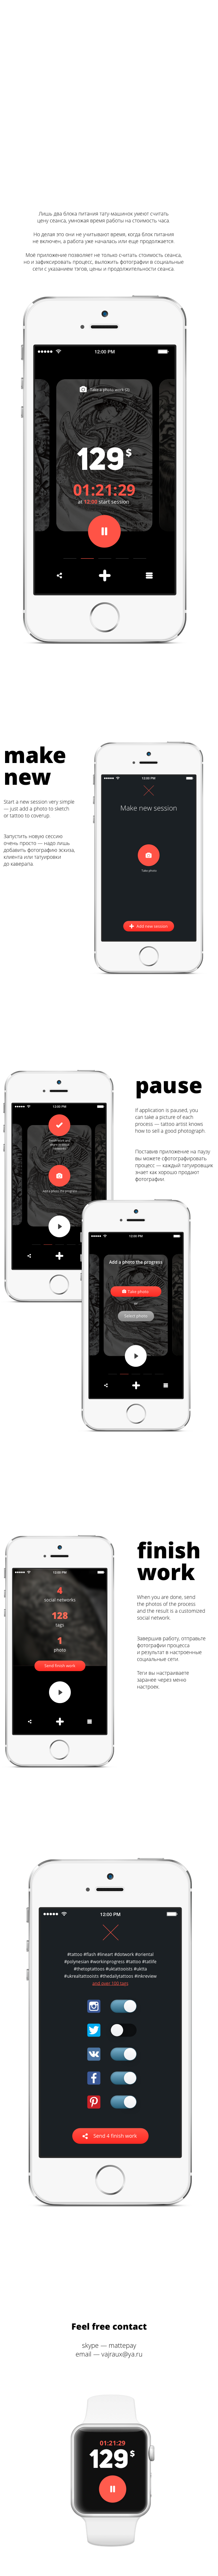 app Mobile app soft tattoo ux UI design interface design iphone app